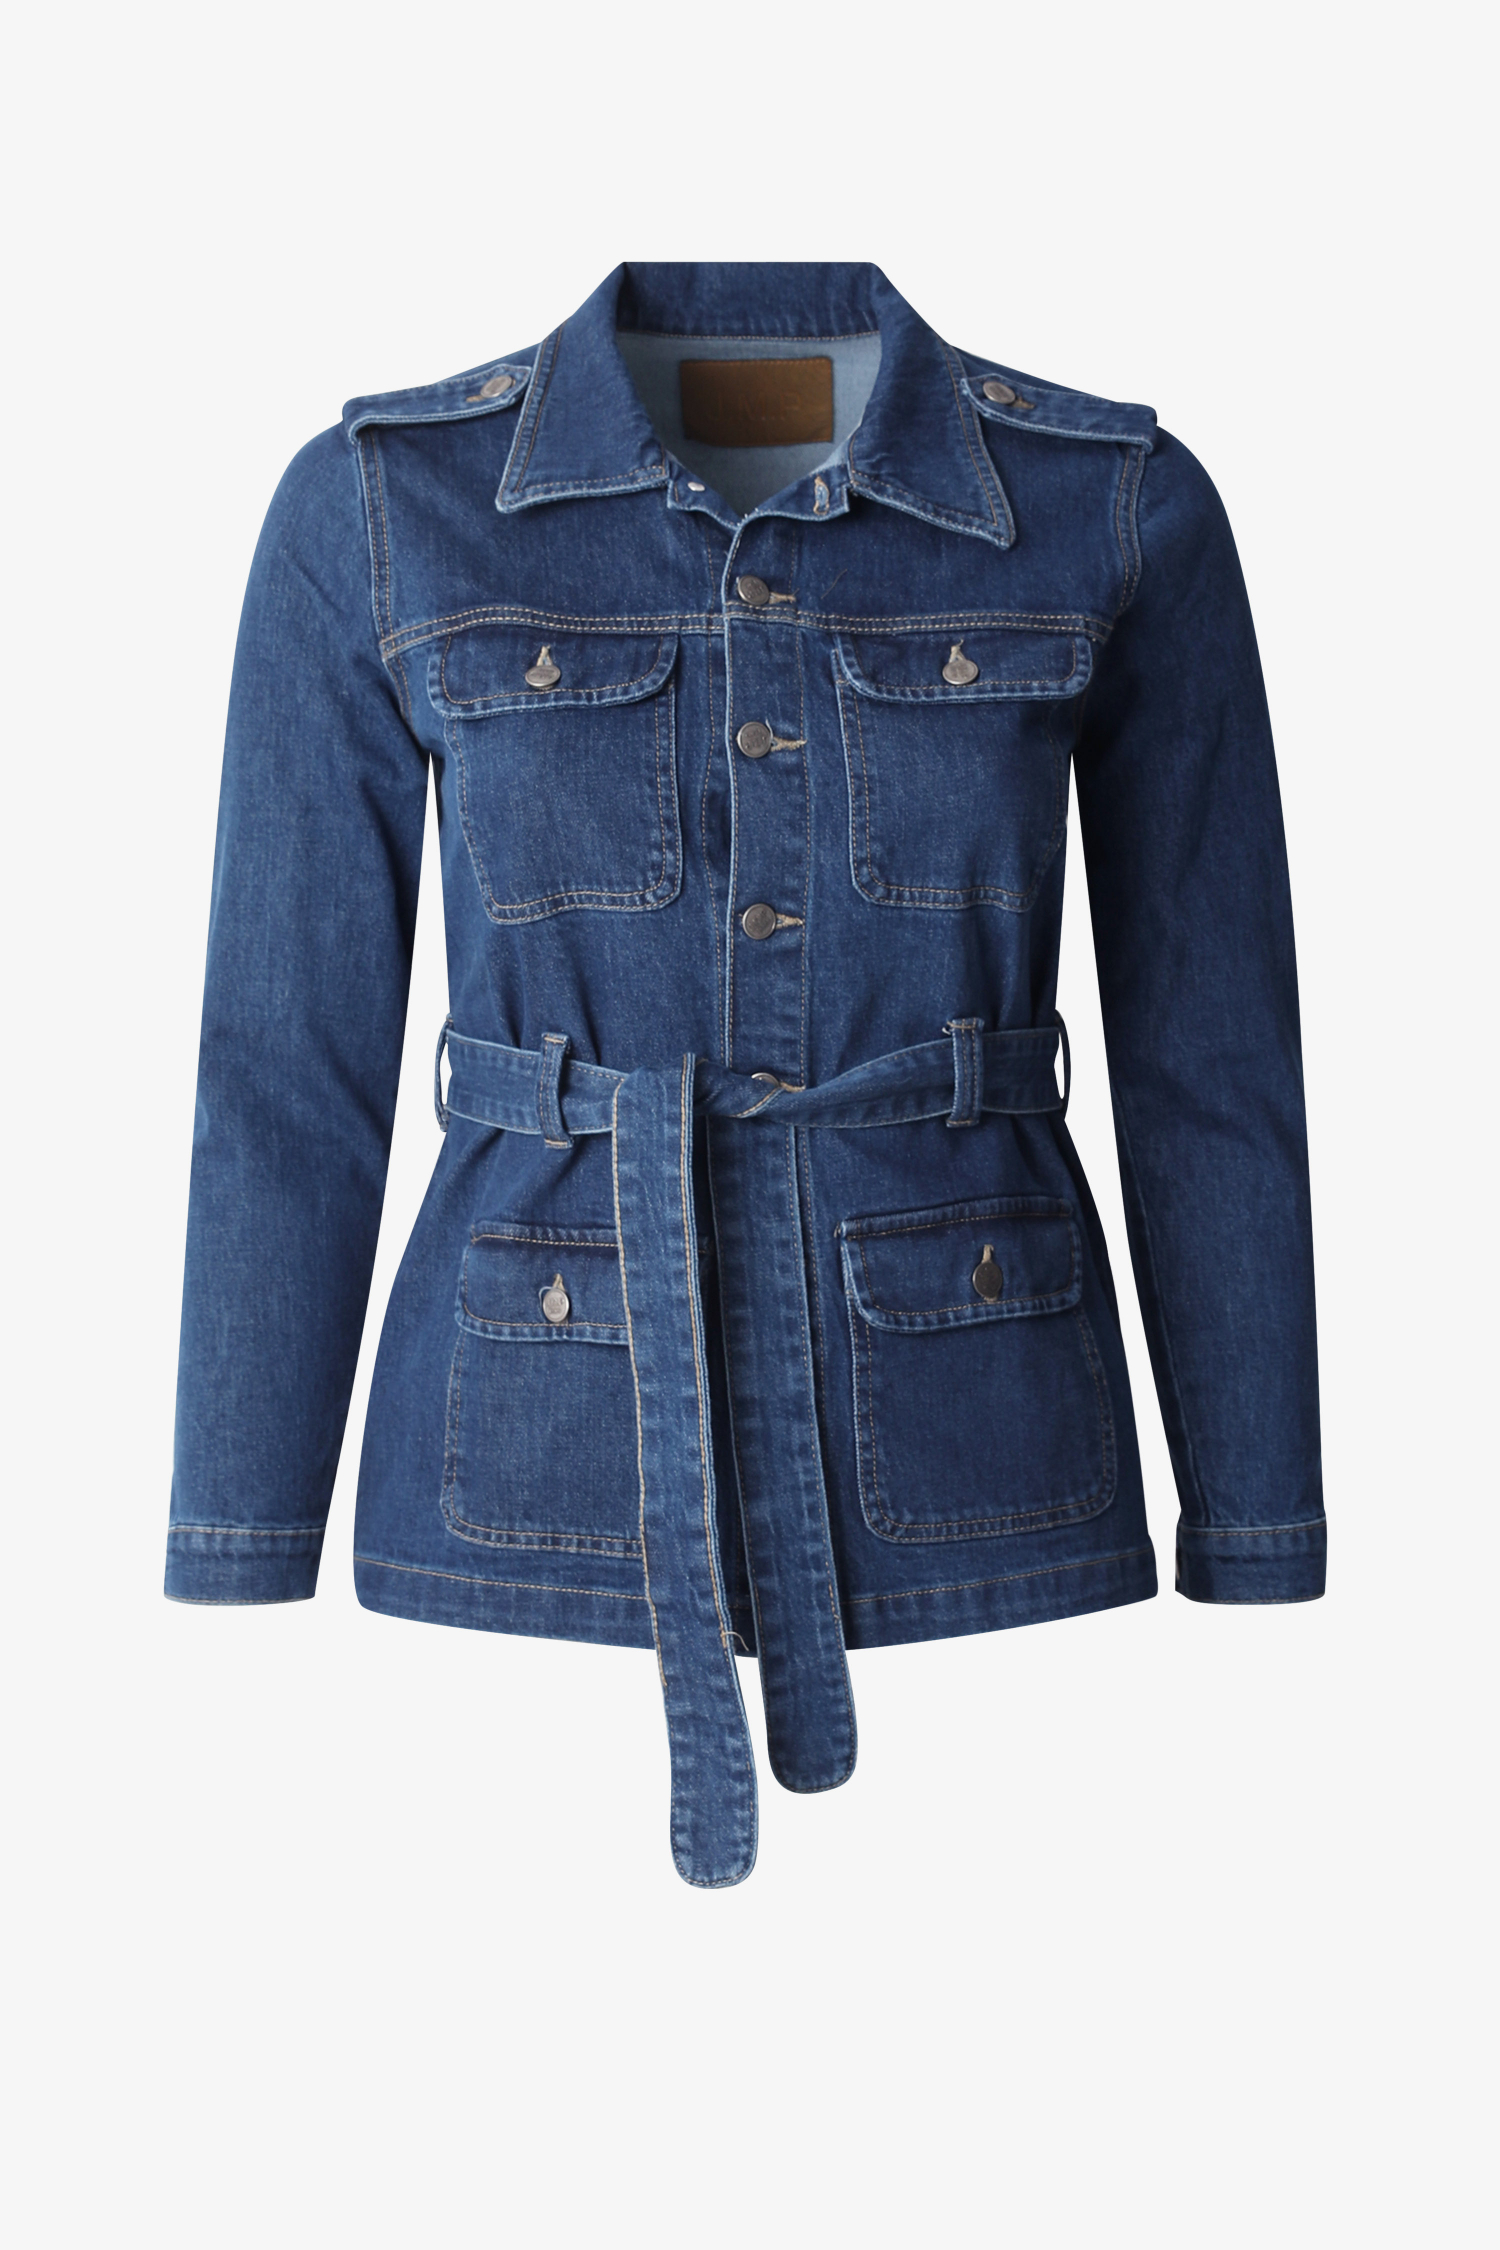 Saharan style jeans jacket (Shipping October 25-30)